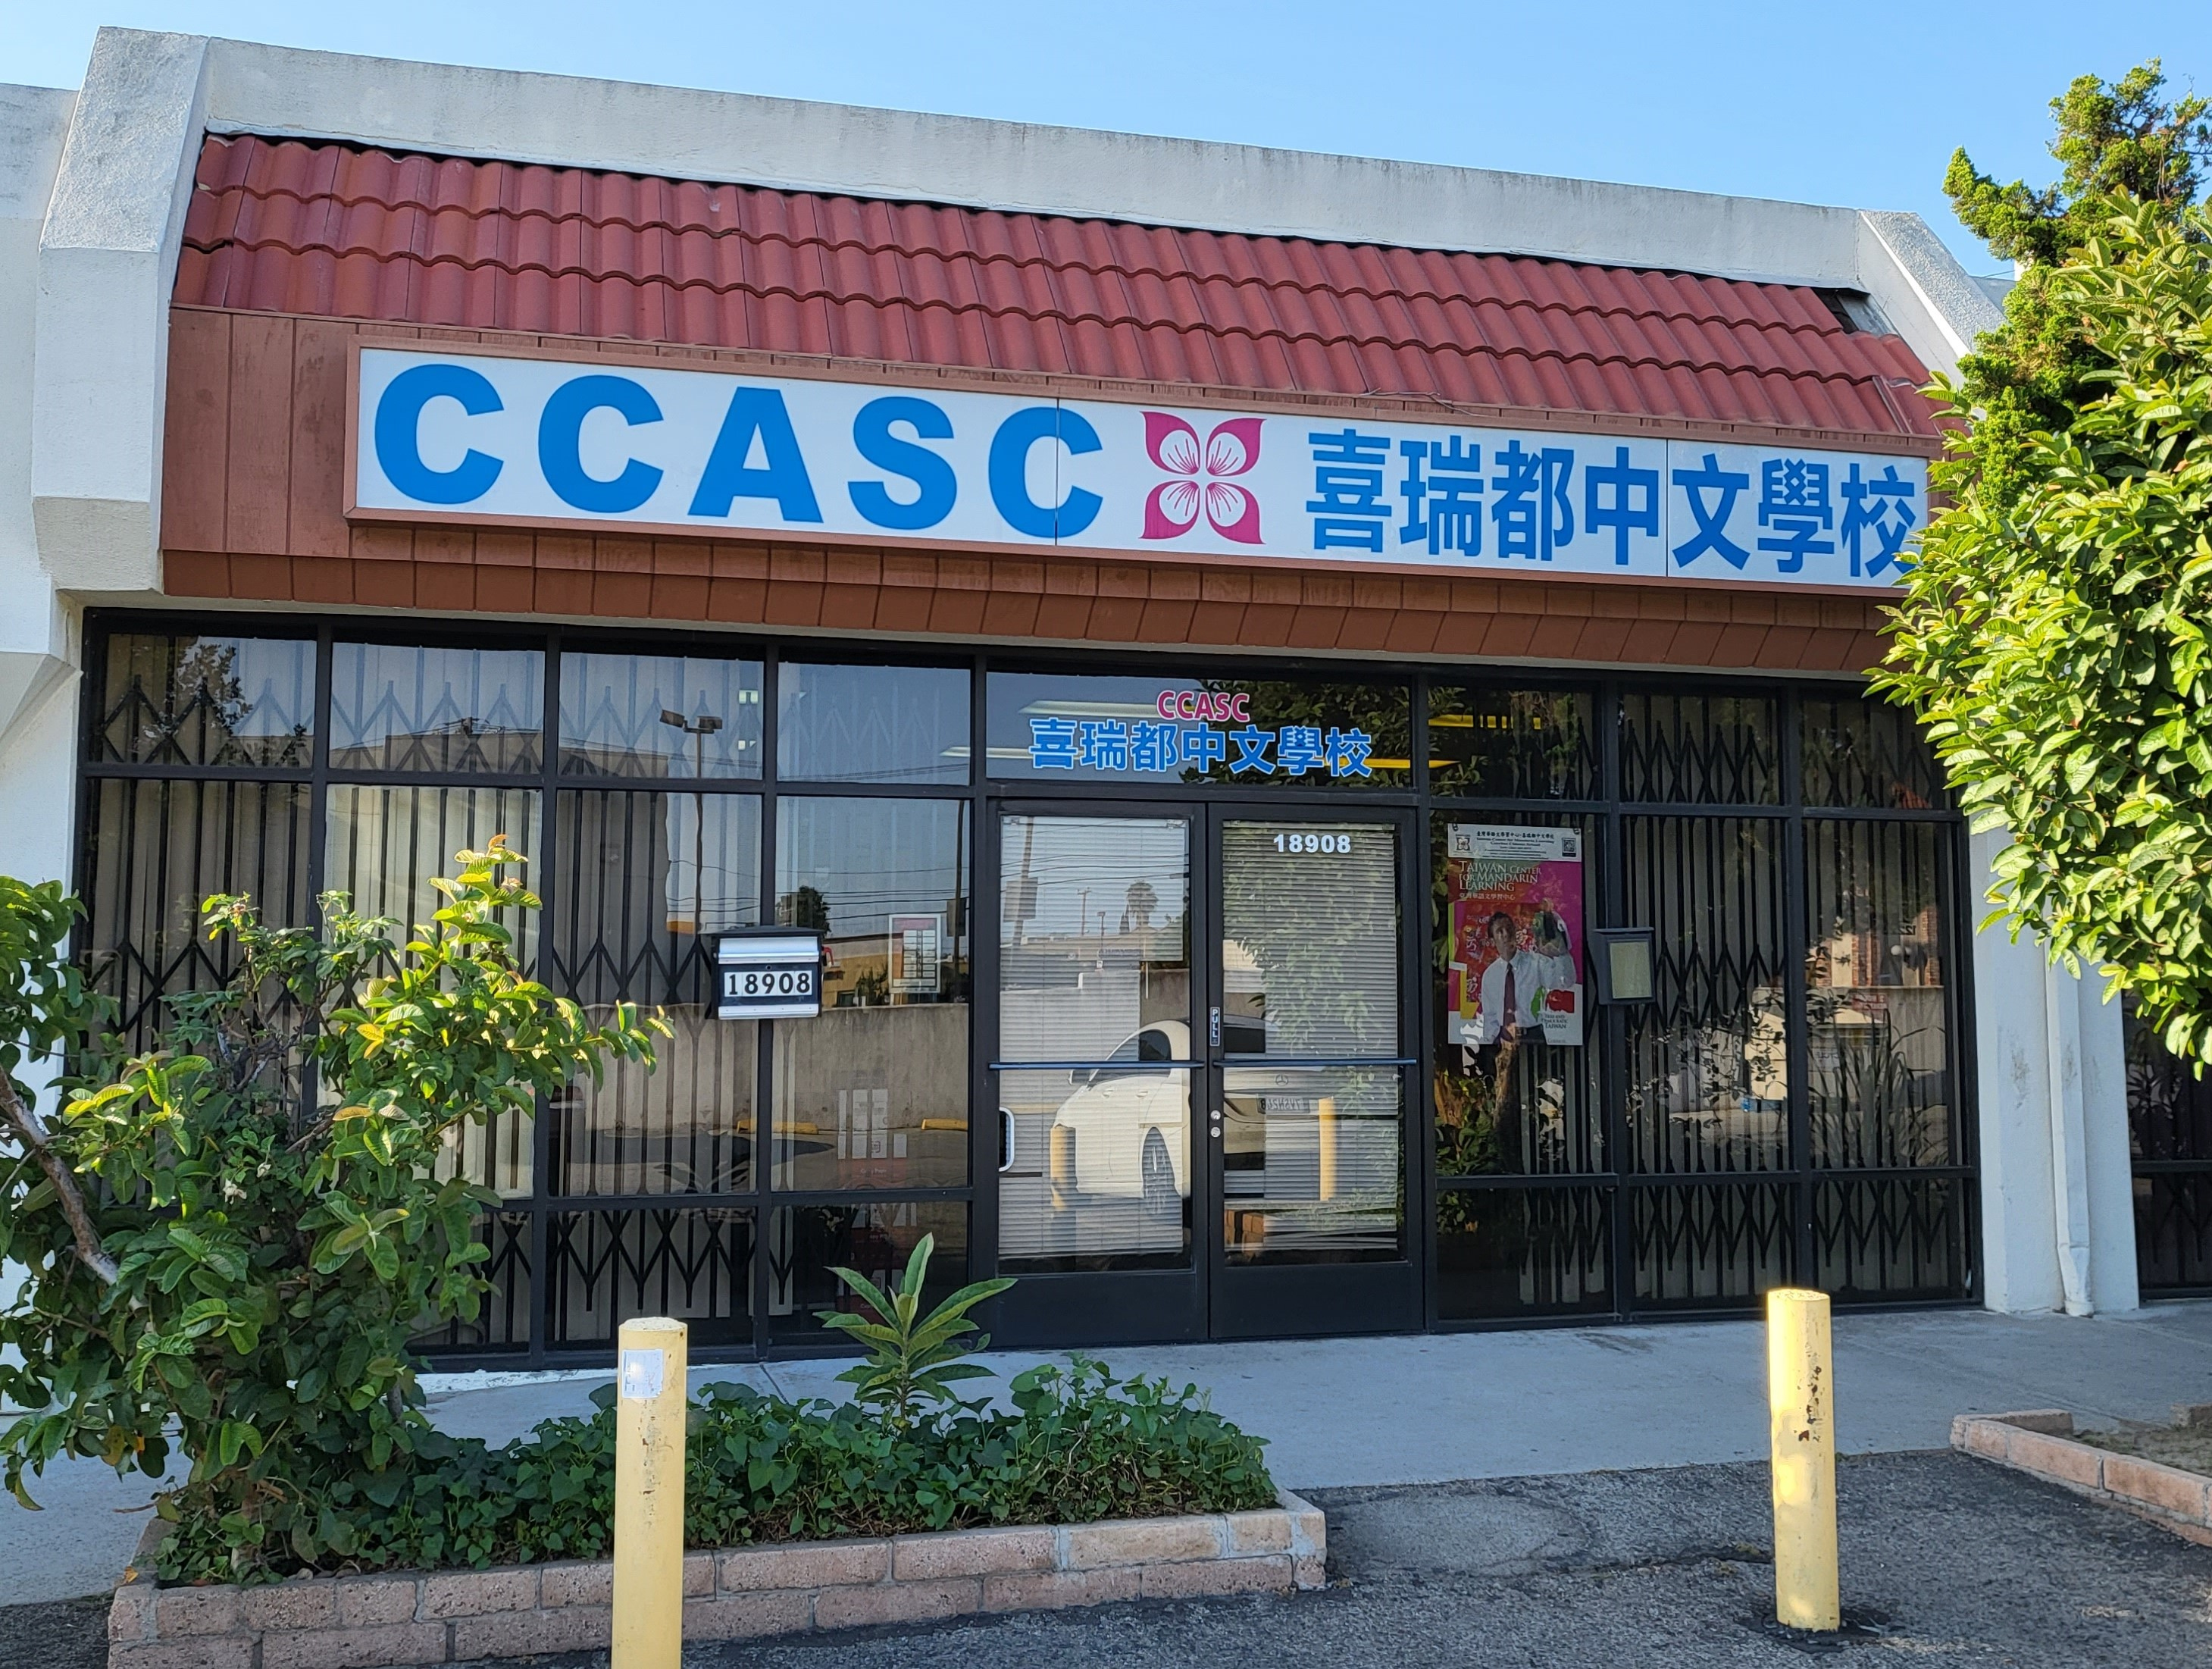 Exterior view of the Taiwan Center for Mandarin Learning  – Cerritos Chinese School. 臺灣華語文學習中心 - 喜瑞都中文學校(教室外觀)